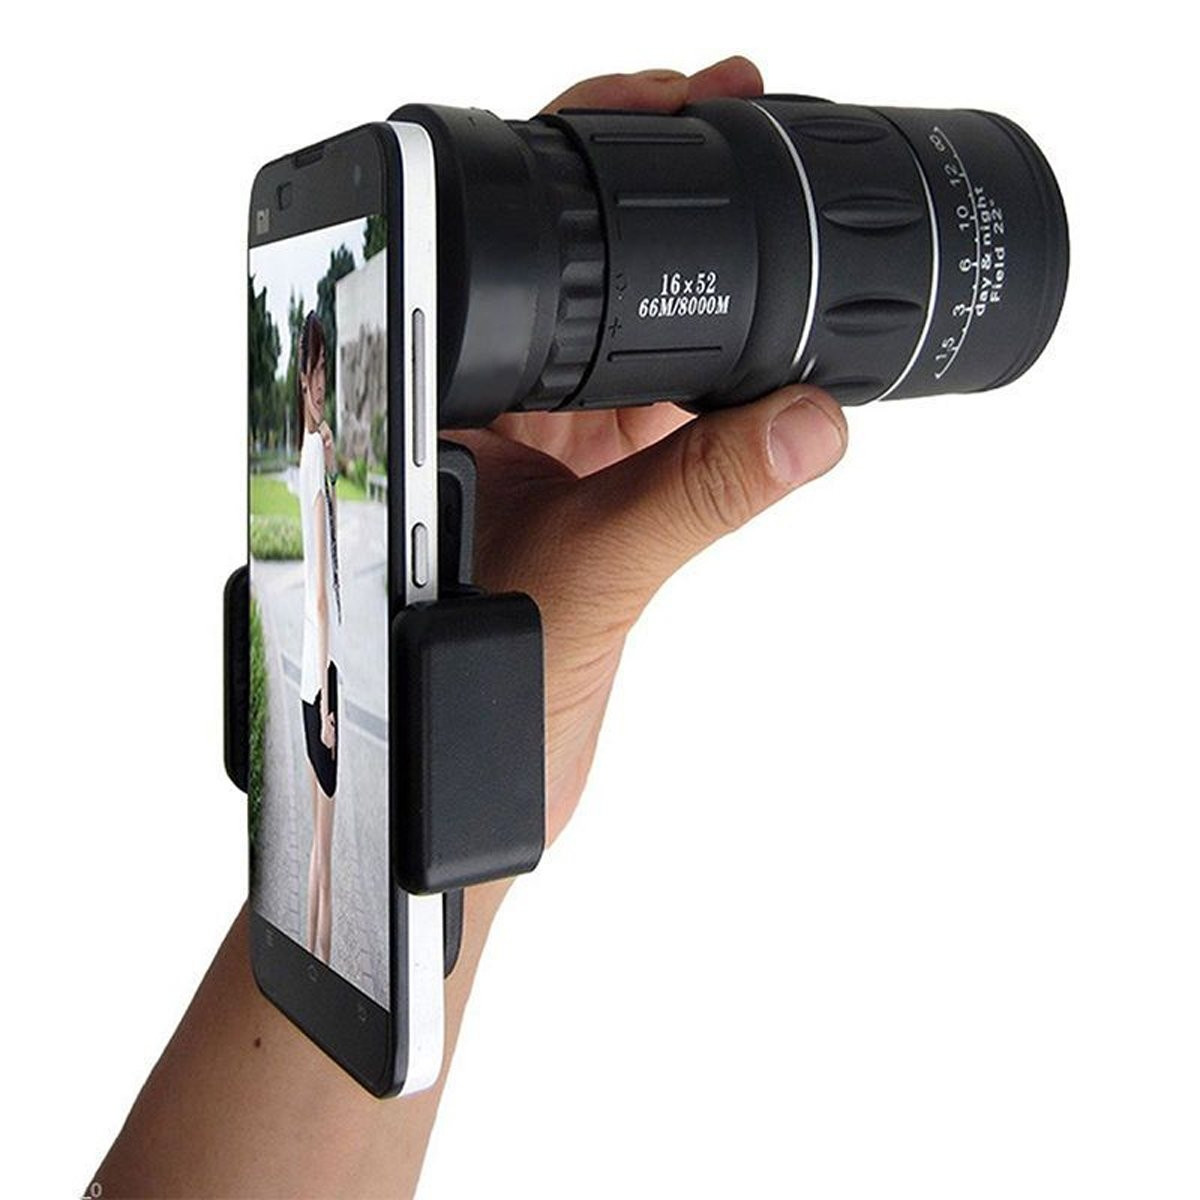 16x52 Zoom távcső, teleobjektív mobiltelefonra